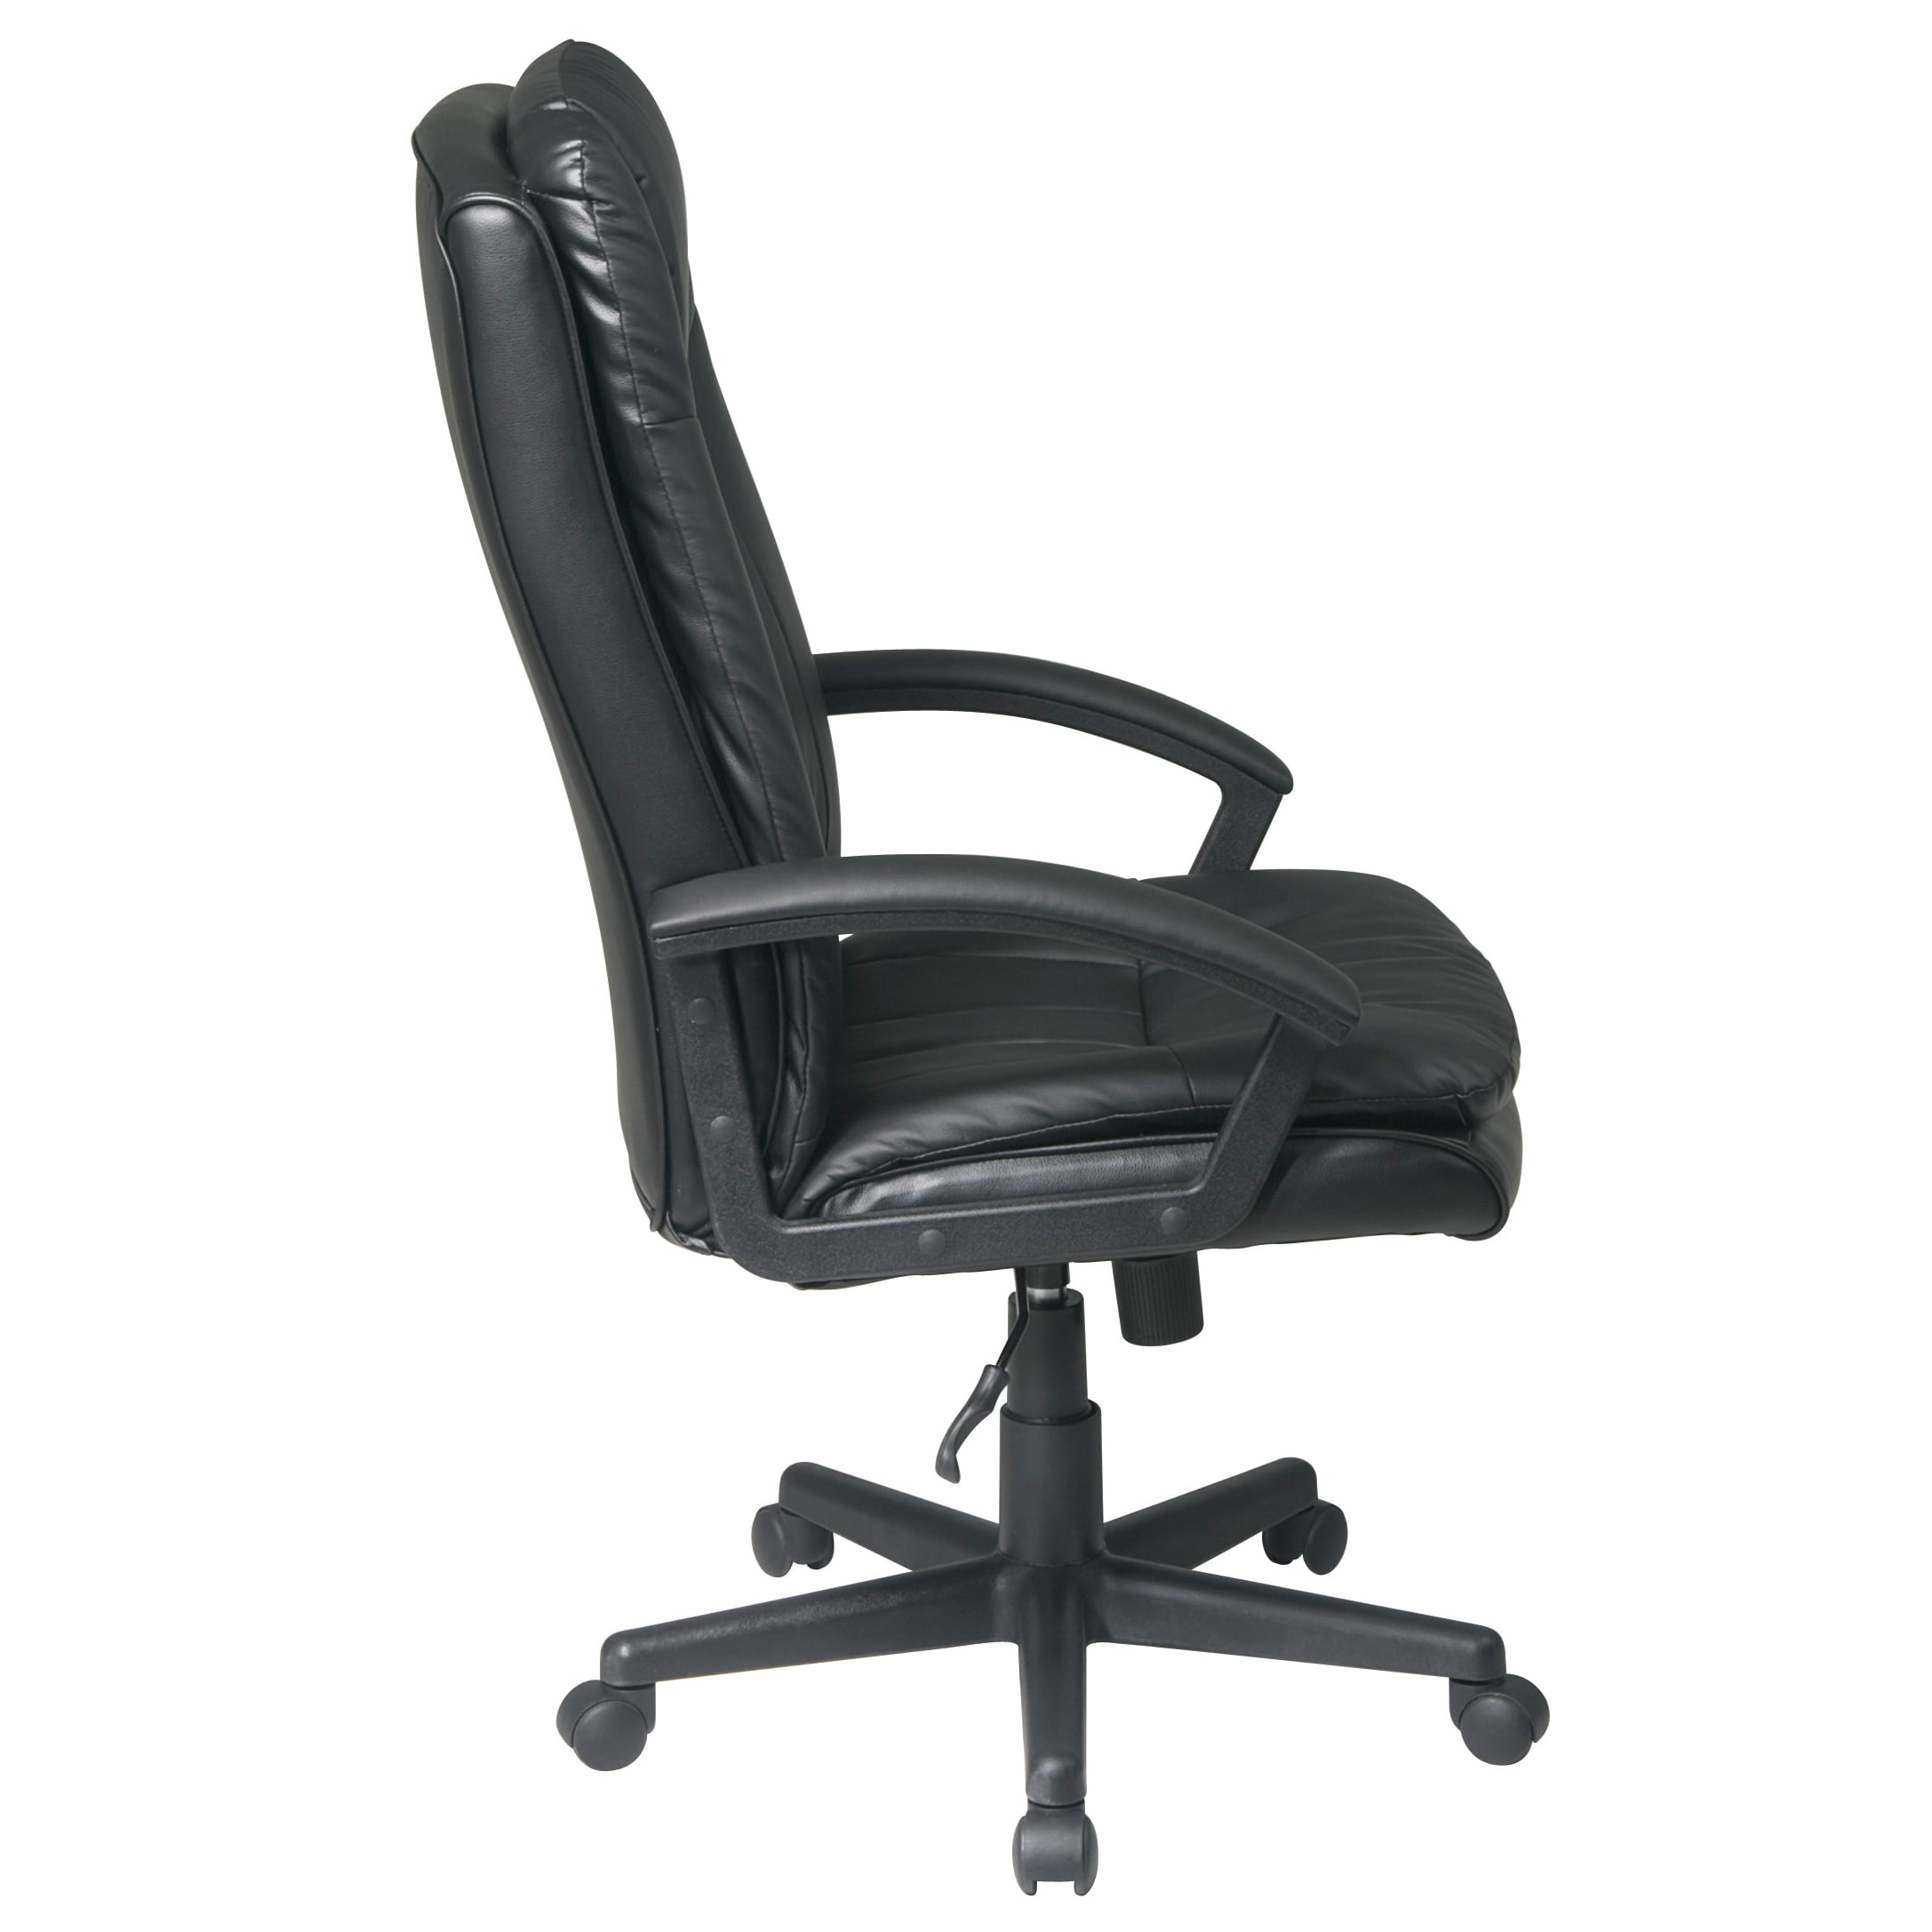 https://ak1.ostkcdn.com/images/products/7986431/Work-Smart-Black-Eco-Leather-High-back-Executive-Chair-398e20ef-0225-4f09-bd4e-44b89e6b7983.jpg